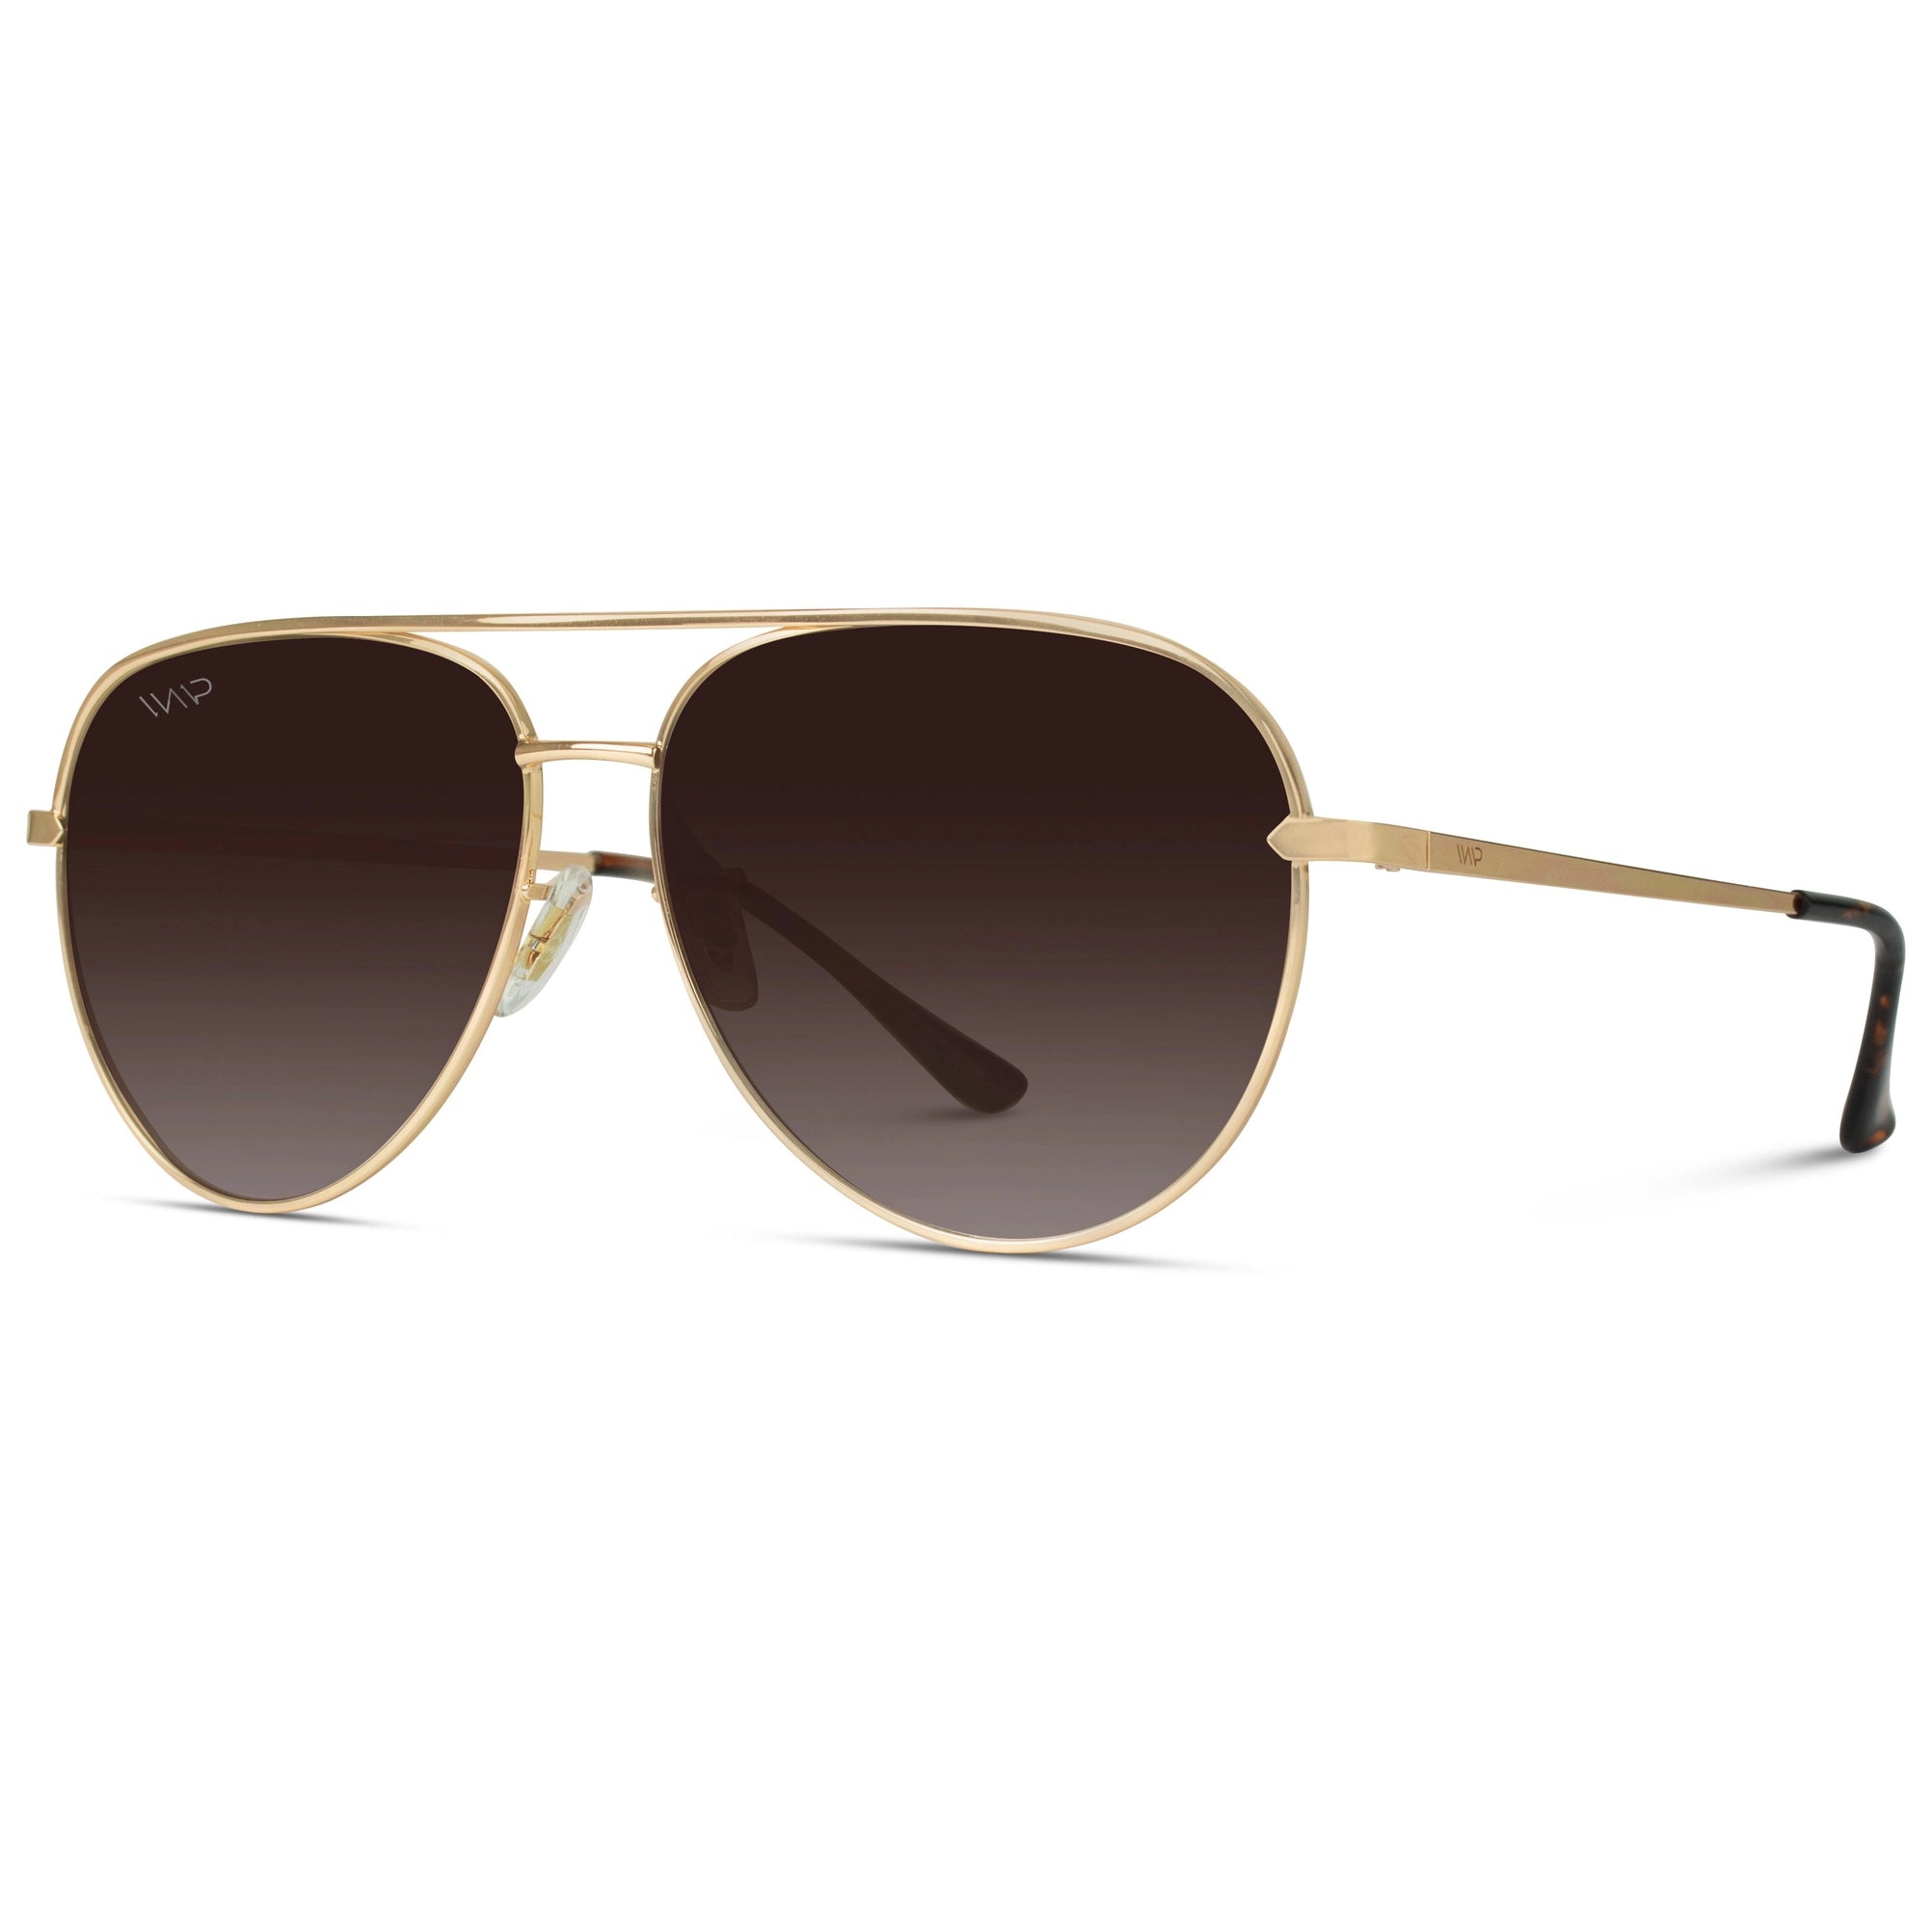 Mila Sunglasses in Gold